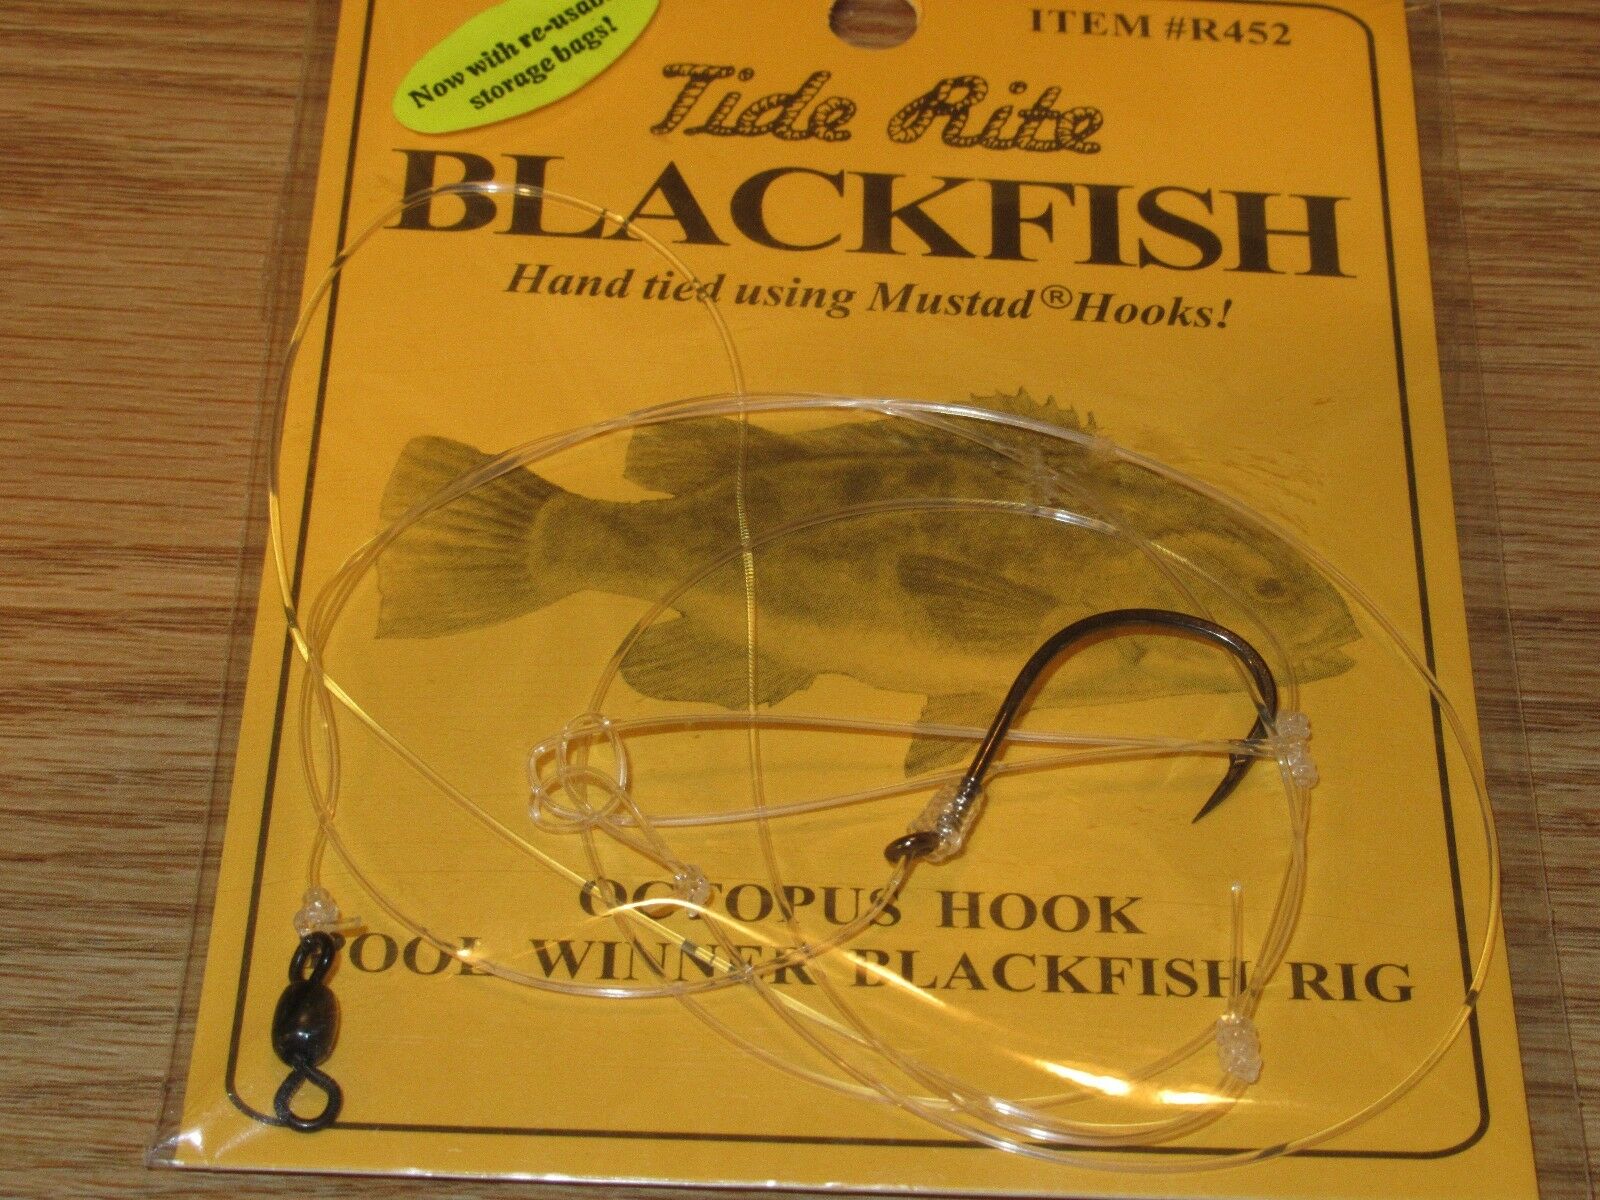 1 BLACKFISH TAUTOG FISHING RIGS TIDE RITE R452 OCTOPUS POOL WINNER 1 HOOK  RIG